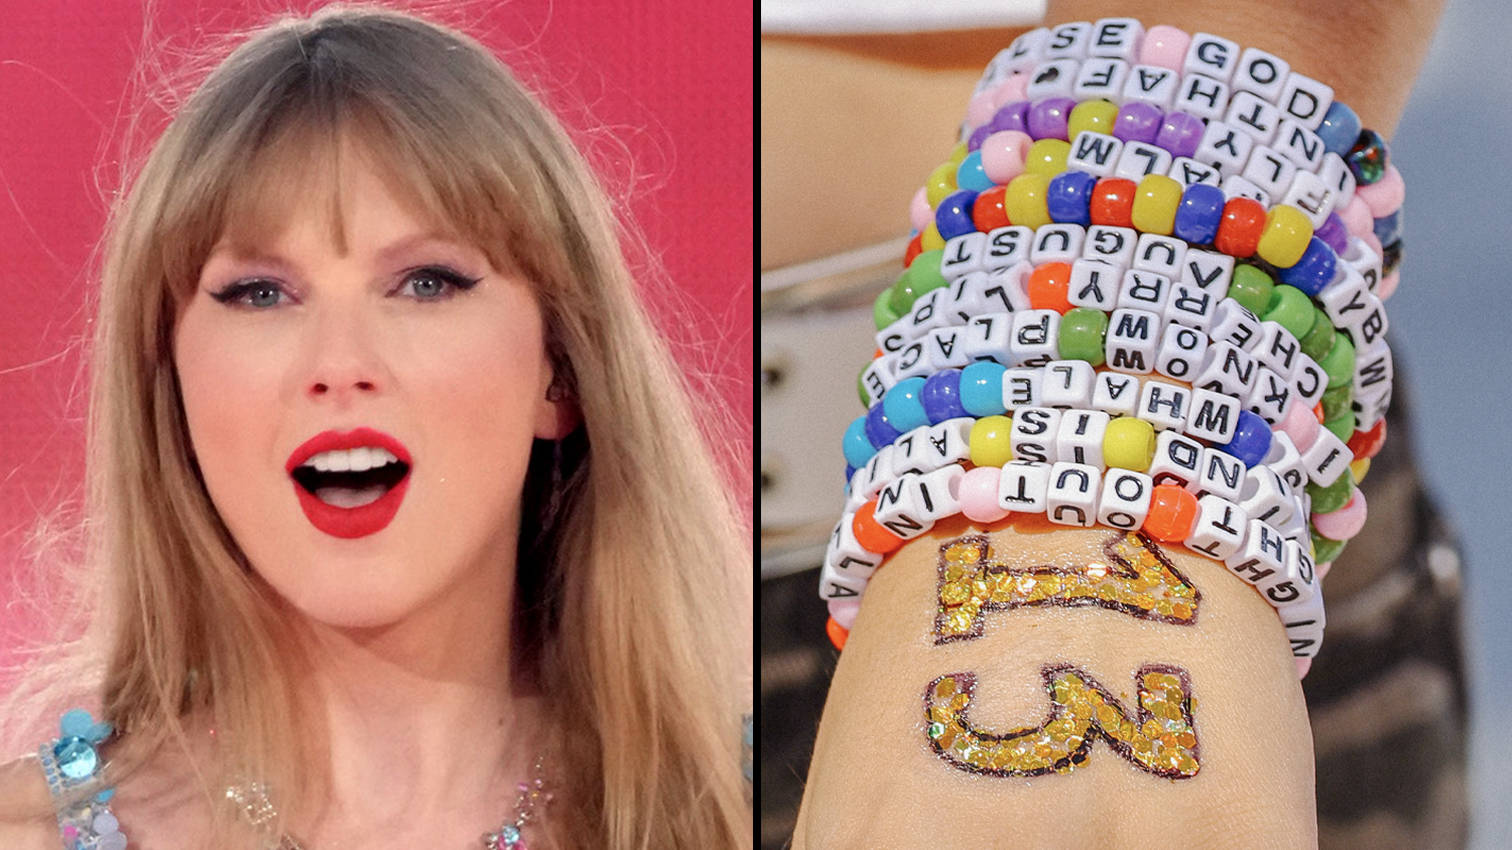 335+ Taylor Swift Eras Tour friendship bracelet ideas - PopBuzz